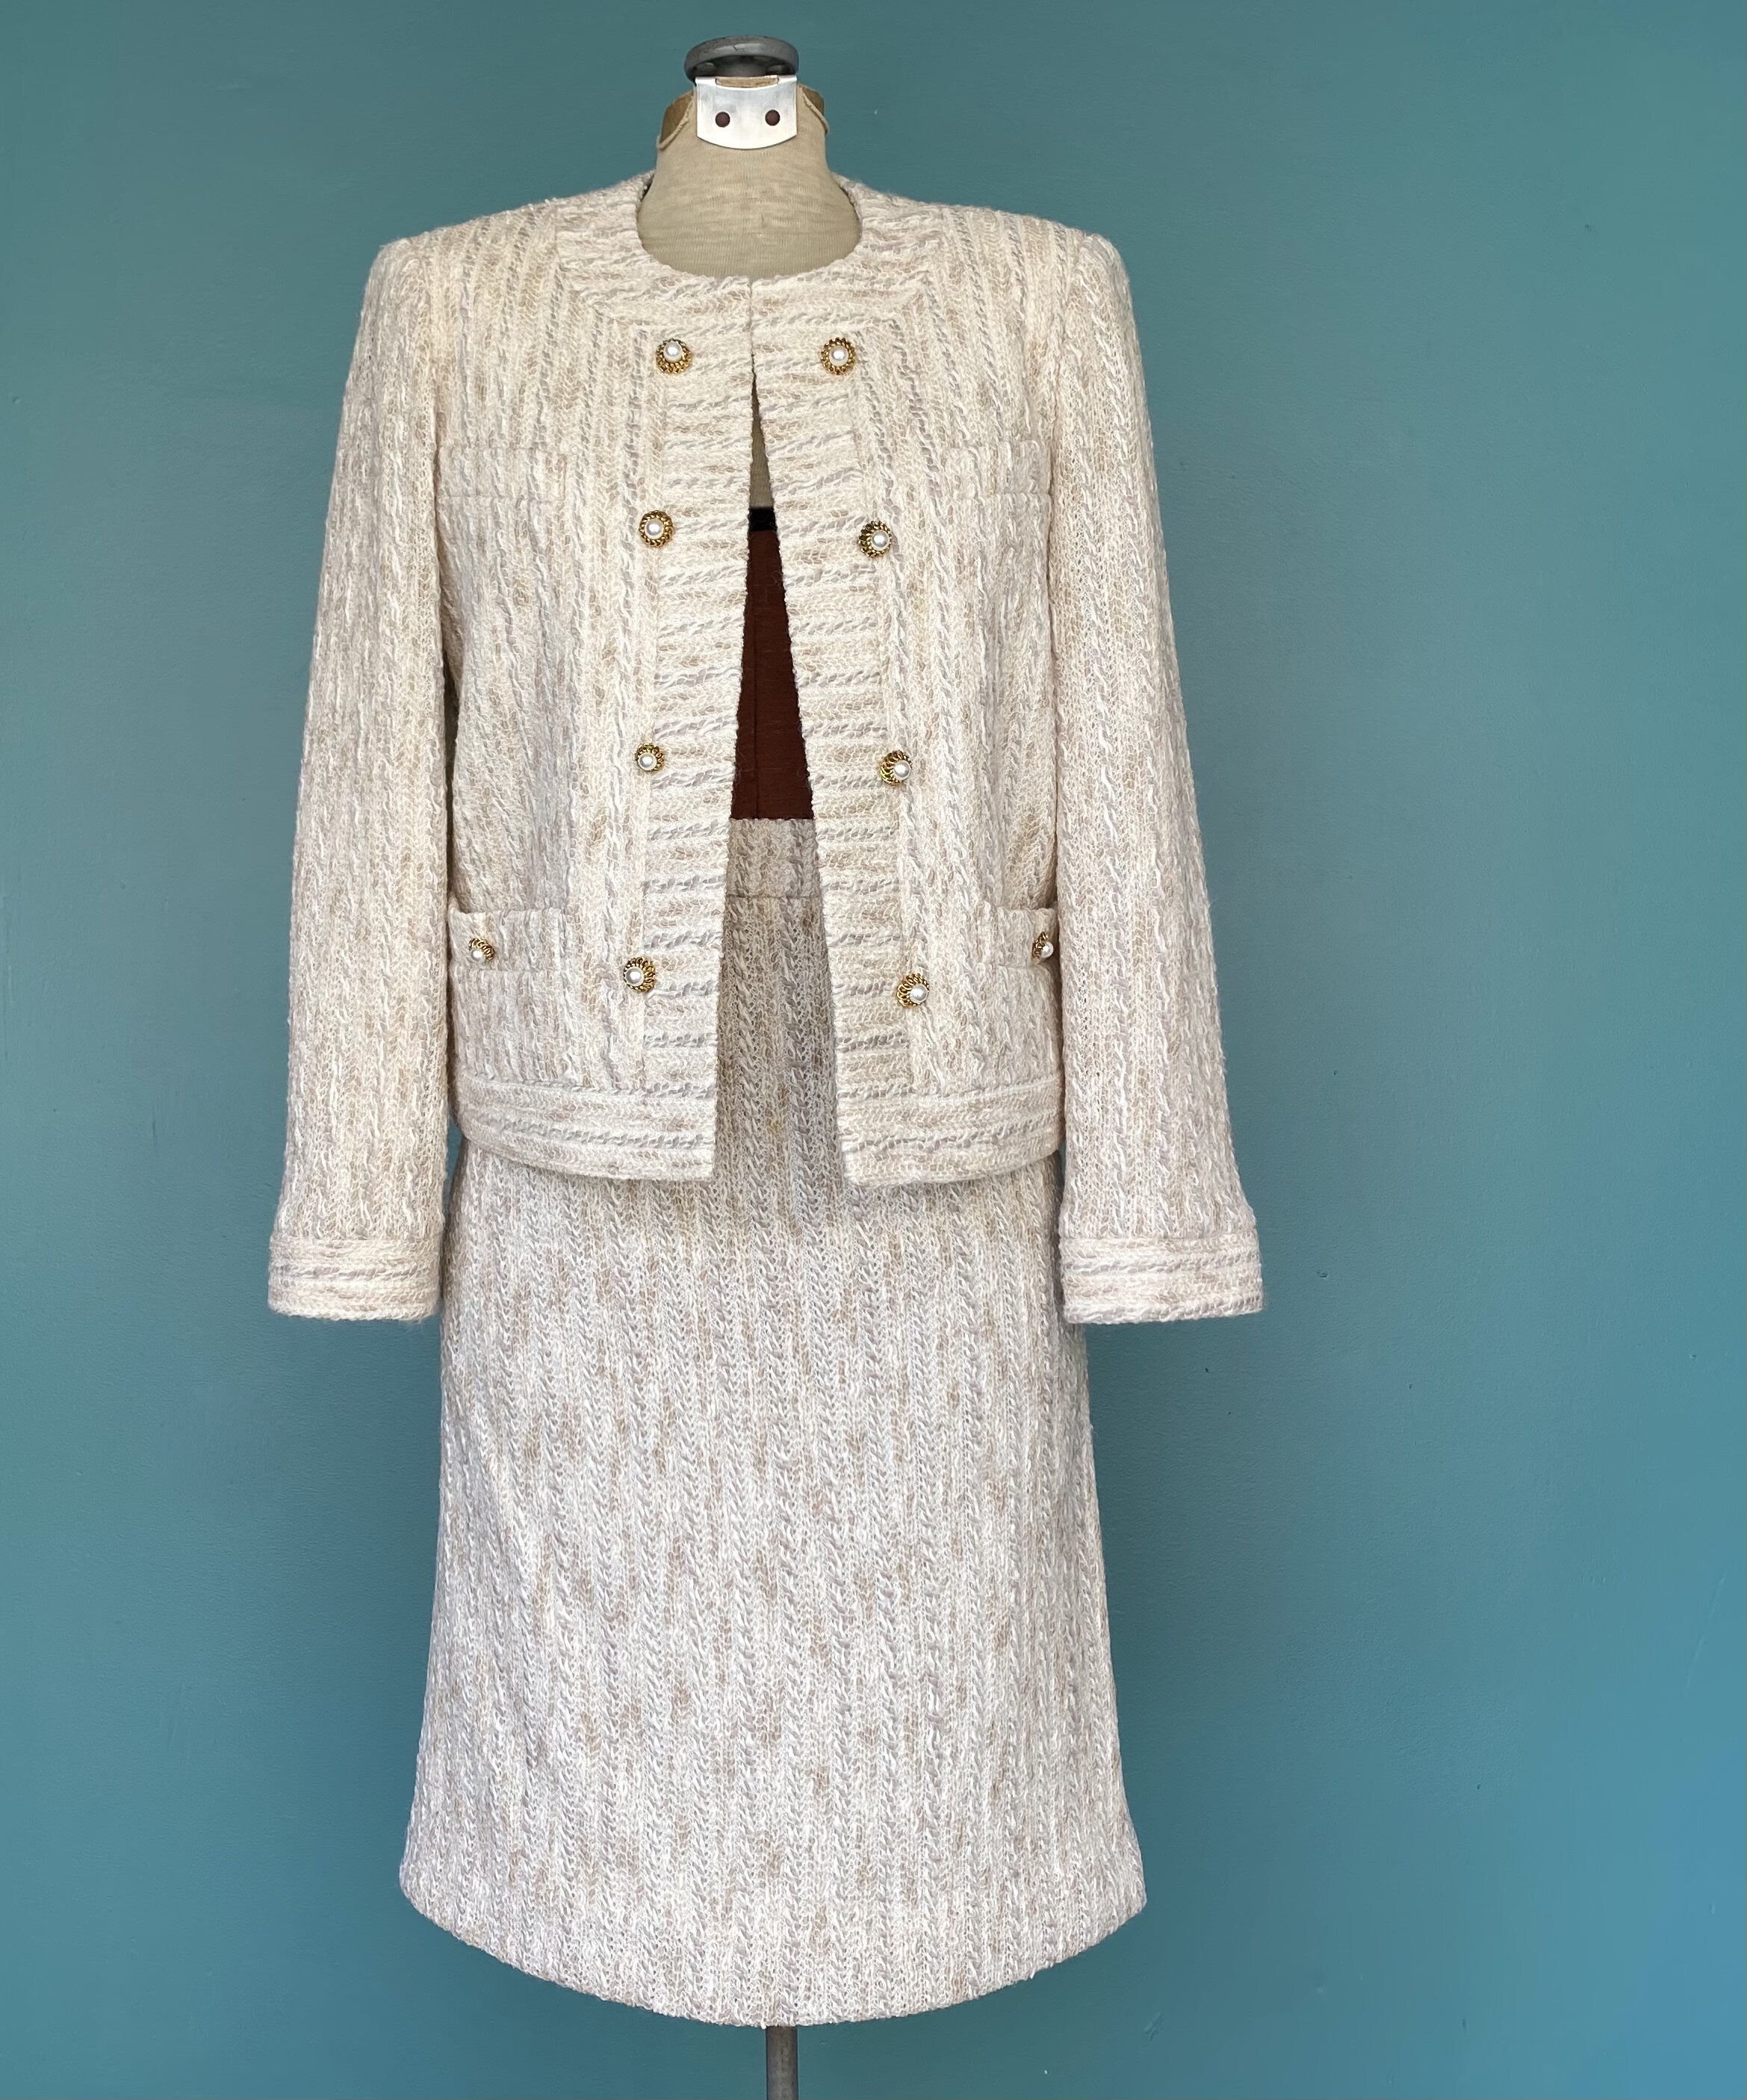 Vintage Louis Feraud Jacket And Skirt Suit